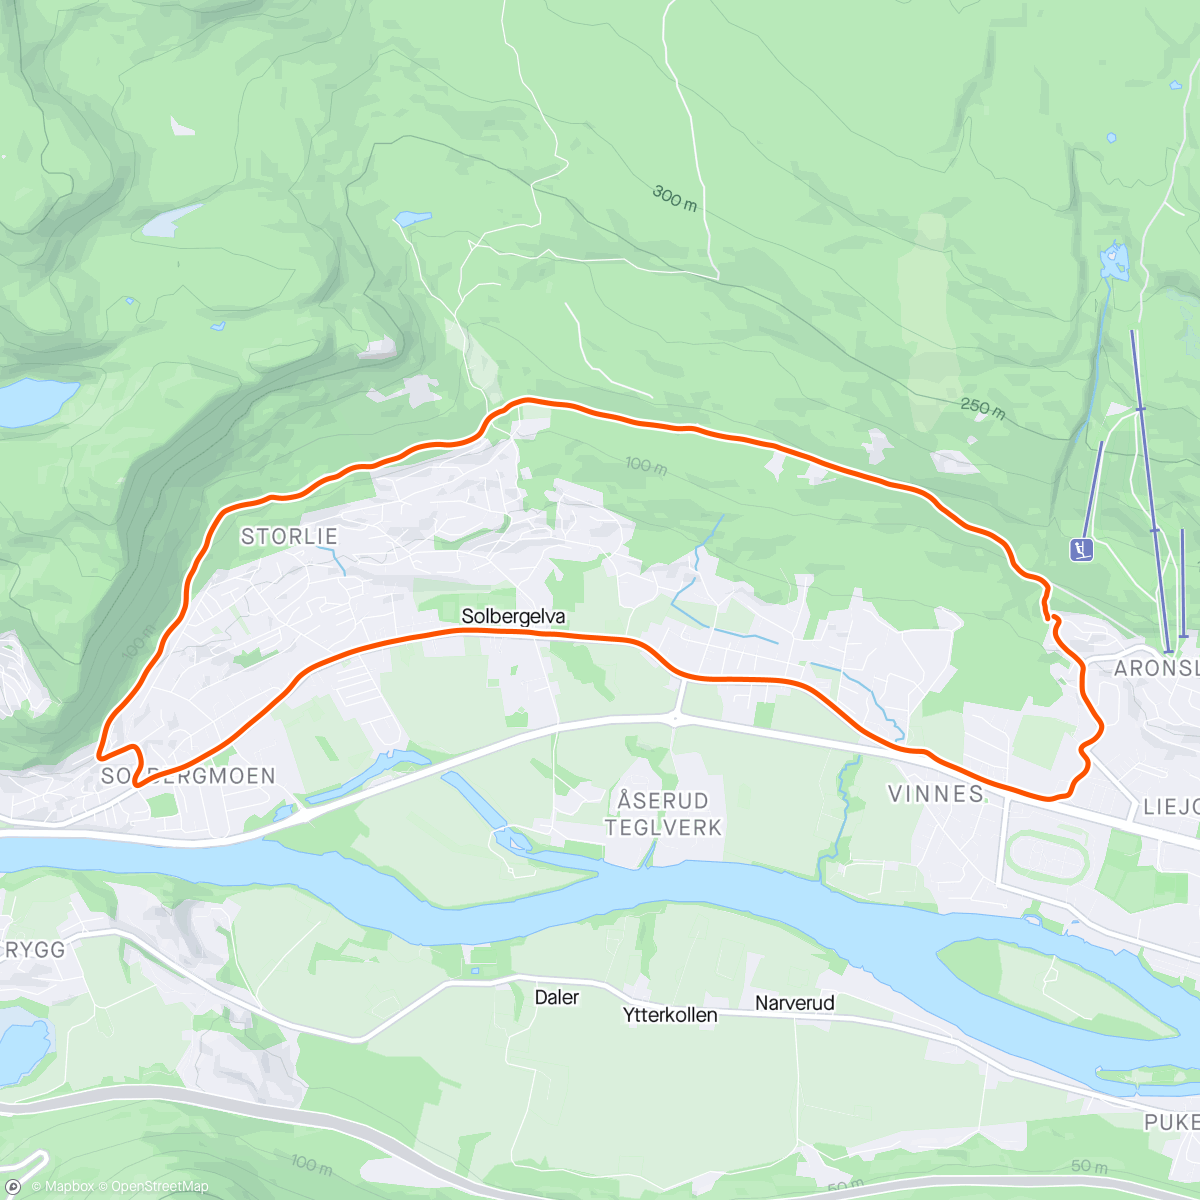 Map of the activity, Snøværsjogg ❄️